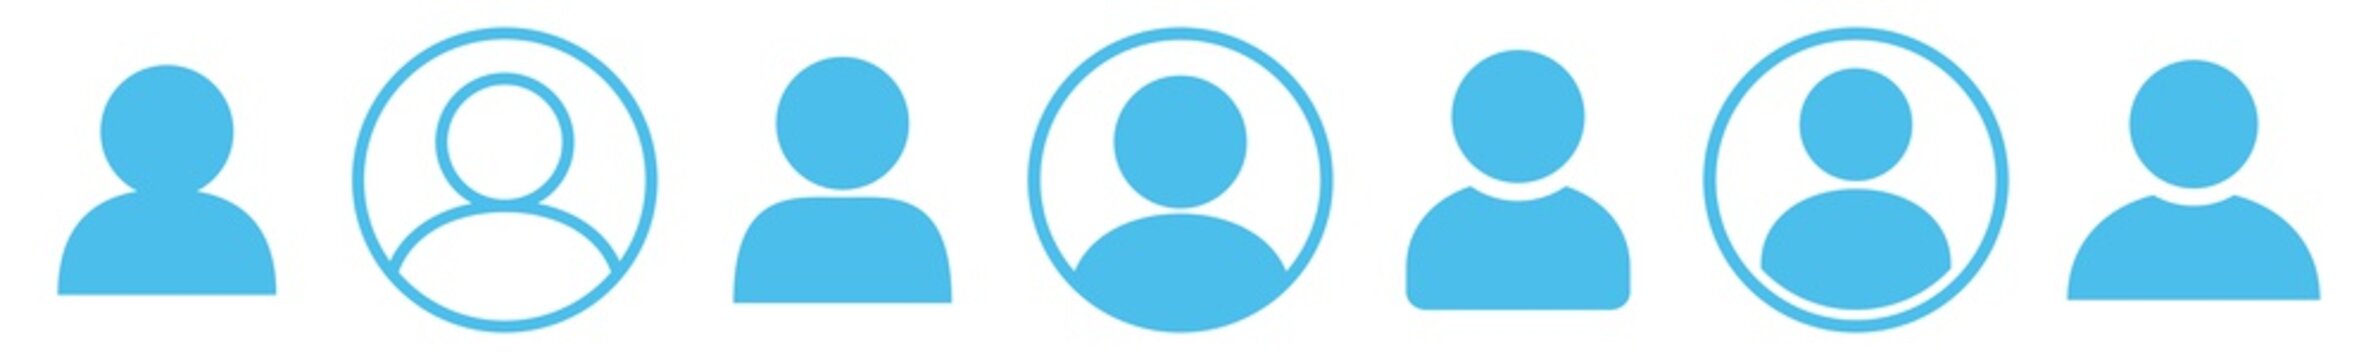 User Icon Blue | Avatar Illustration | Client Symbol | Member Profile Logo | Login Head Sign | Isolated | Variations